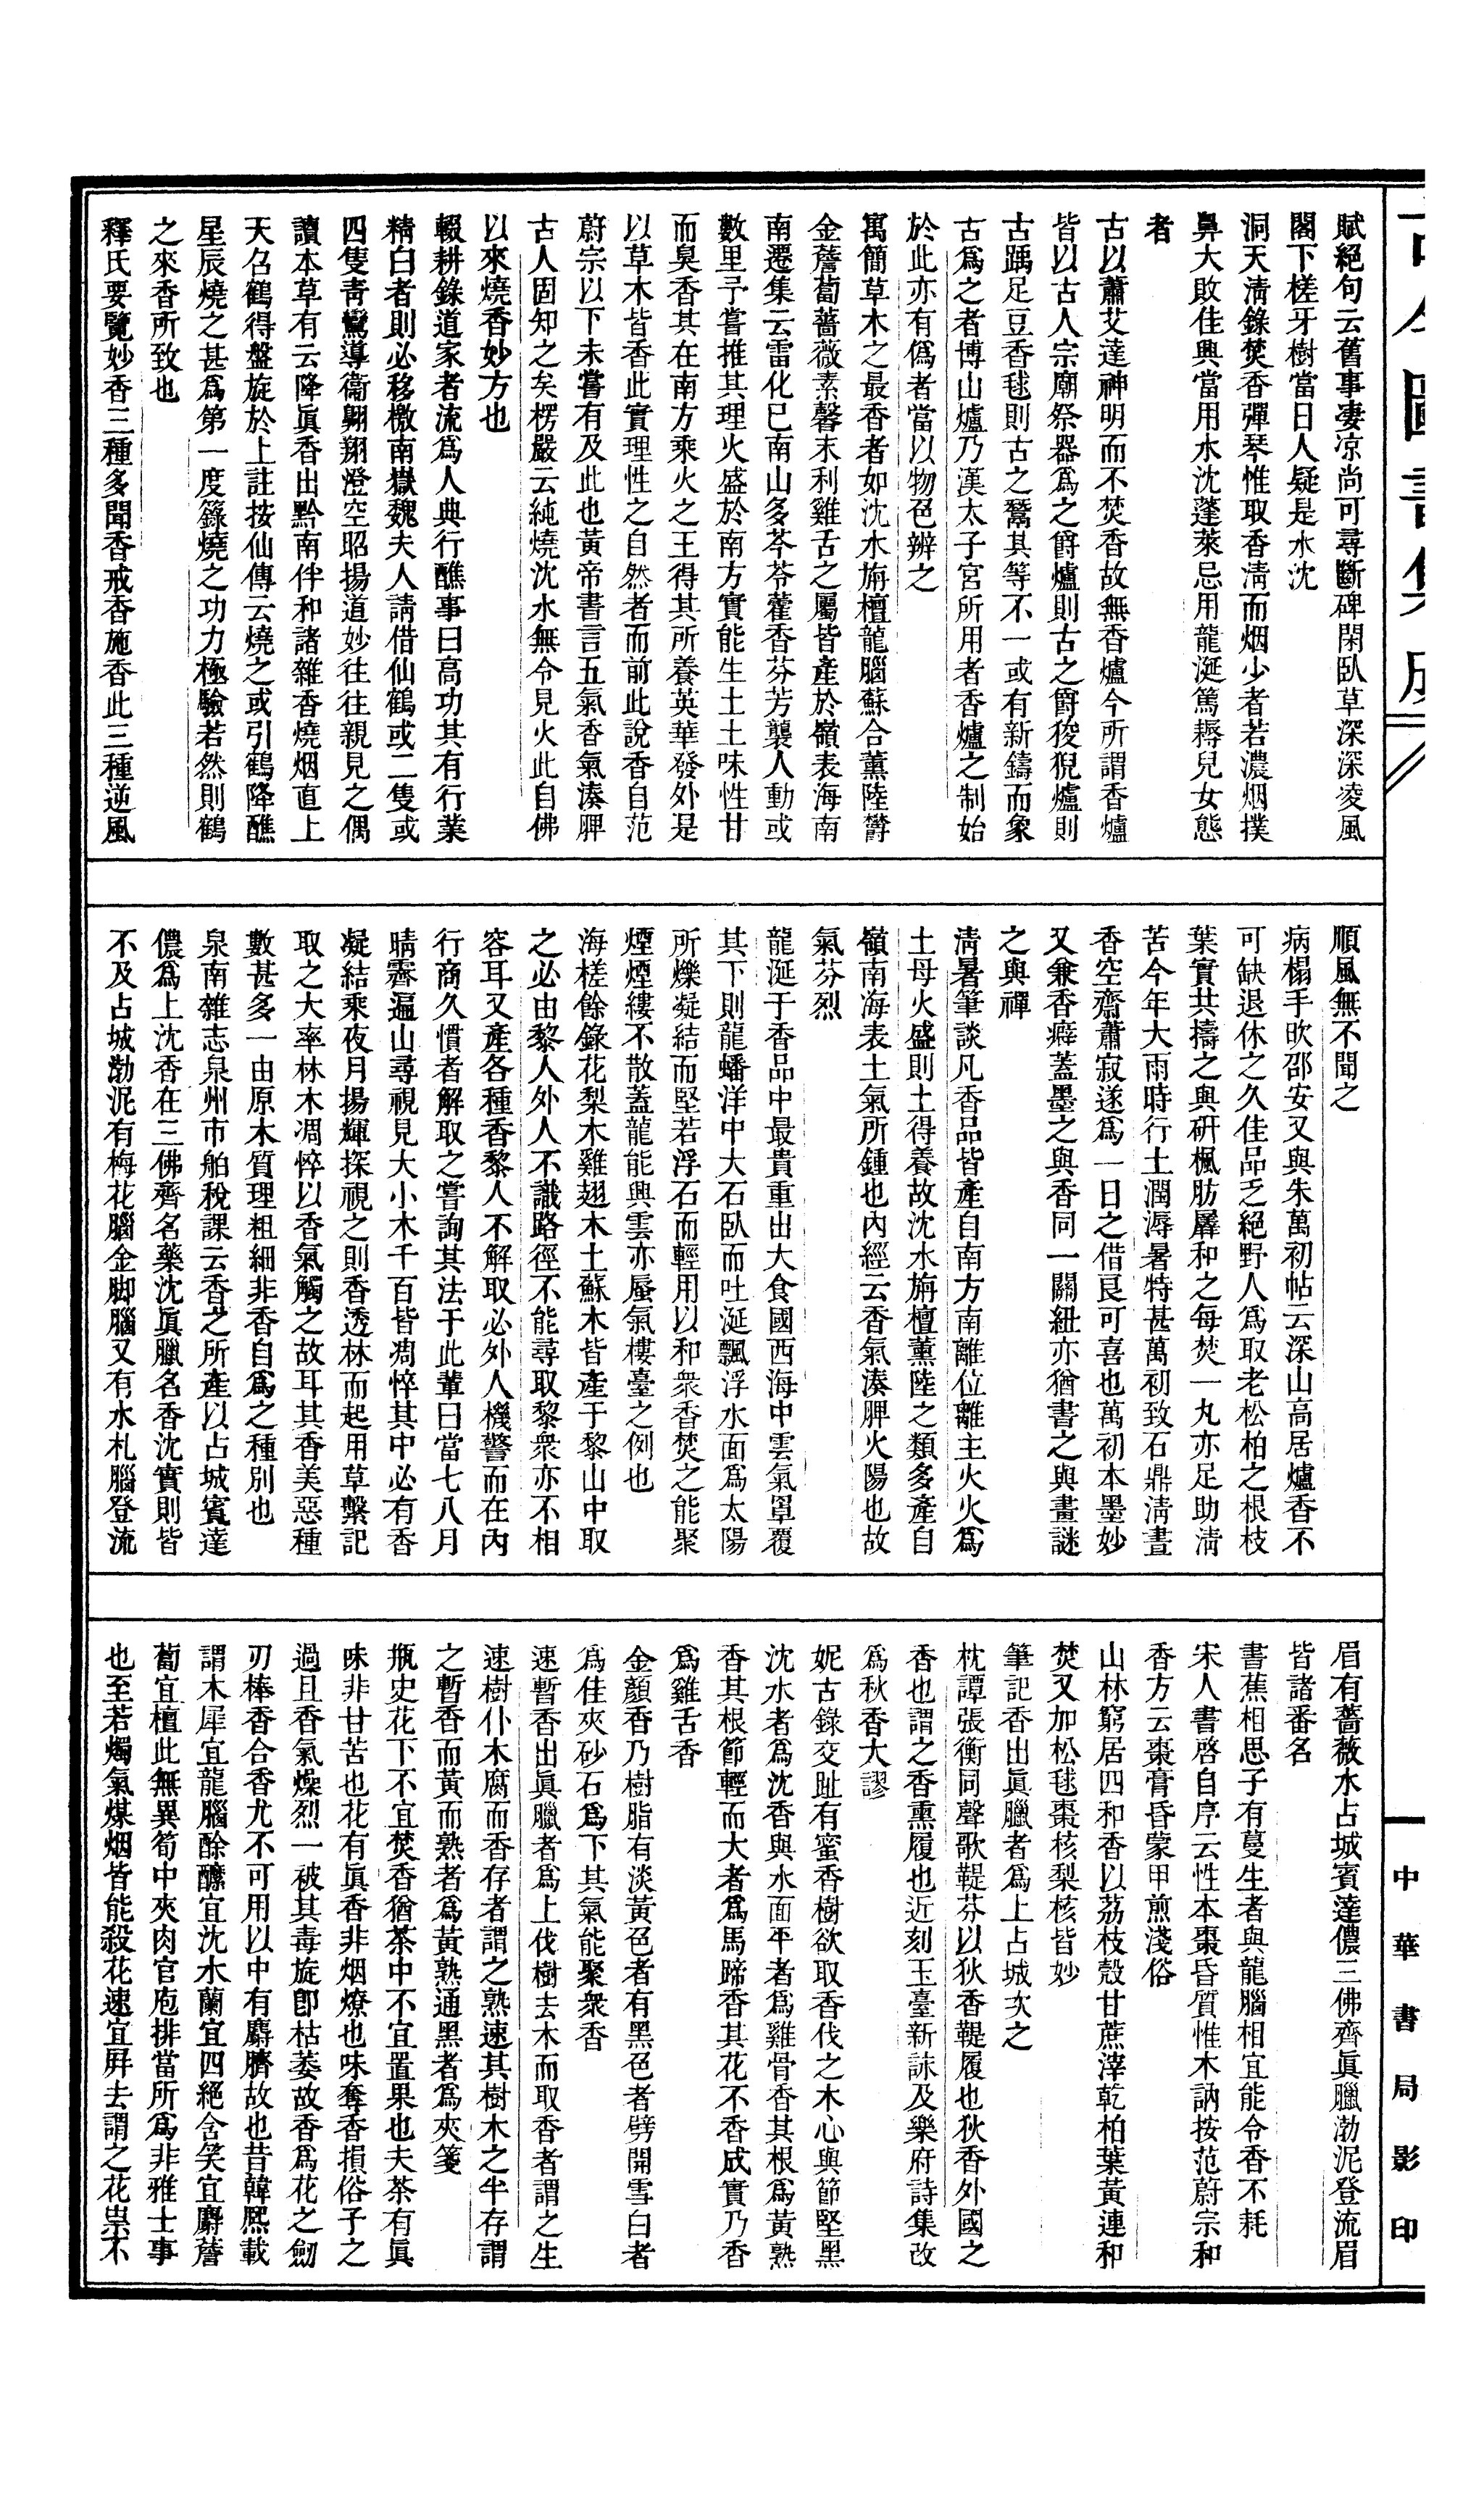 Page Gujin Tushu Jicheng Volume 556 1700 1725 Djvu 93 维基文库 自由的图书馆